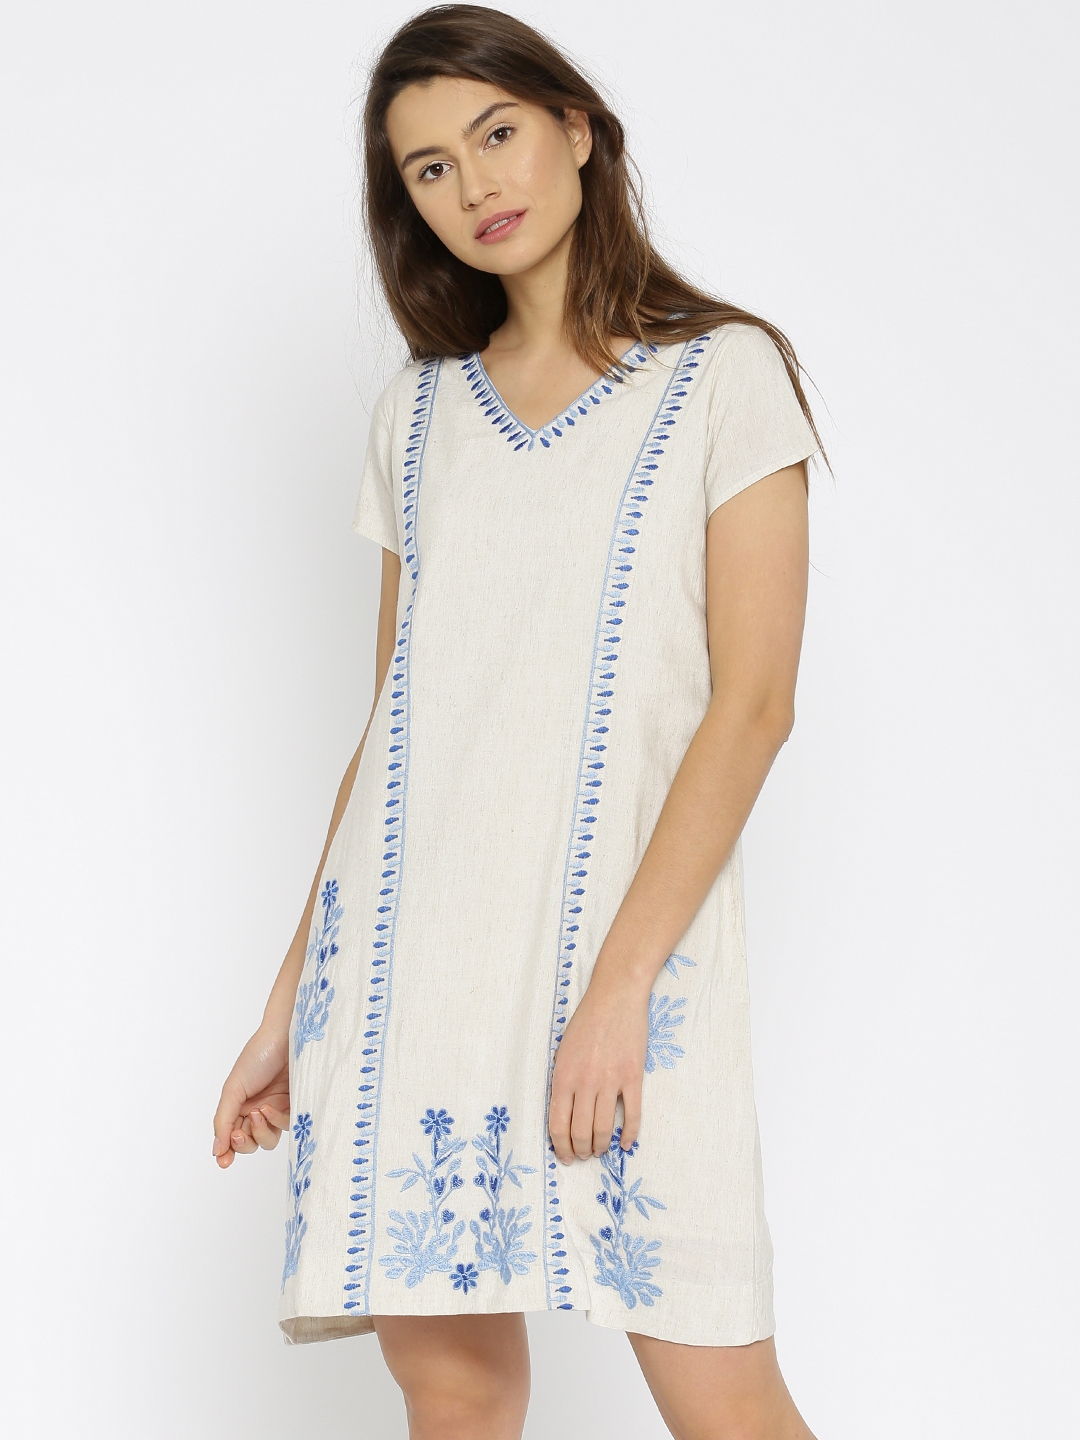 Buy Global Desi Women Off White Self Design A Line Dress Dresses For Women 1849989 Myntra 